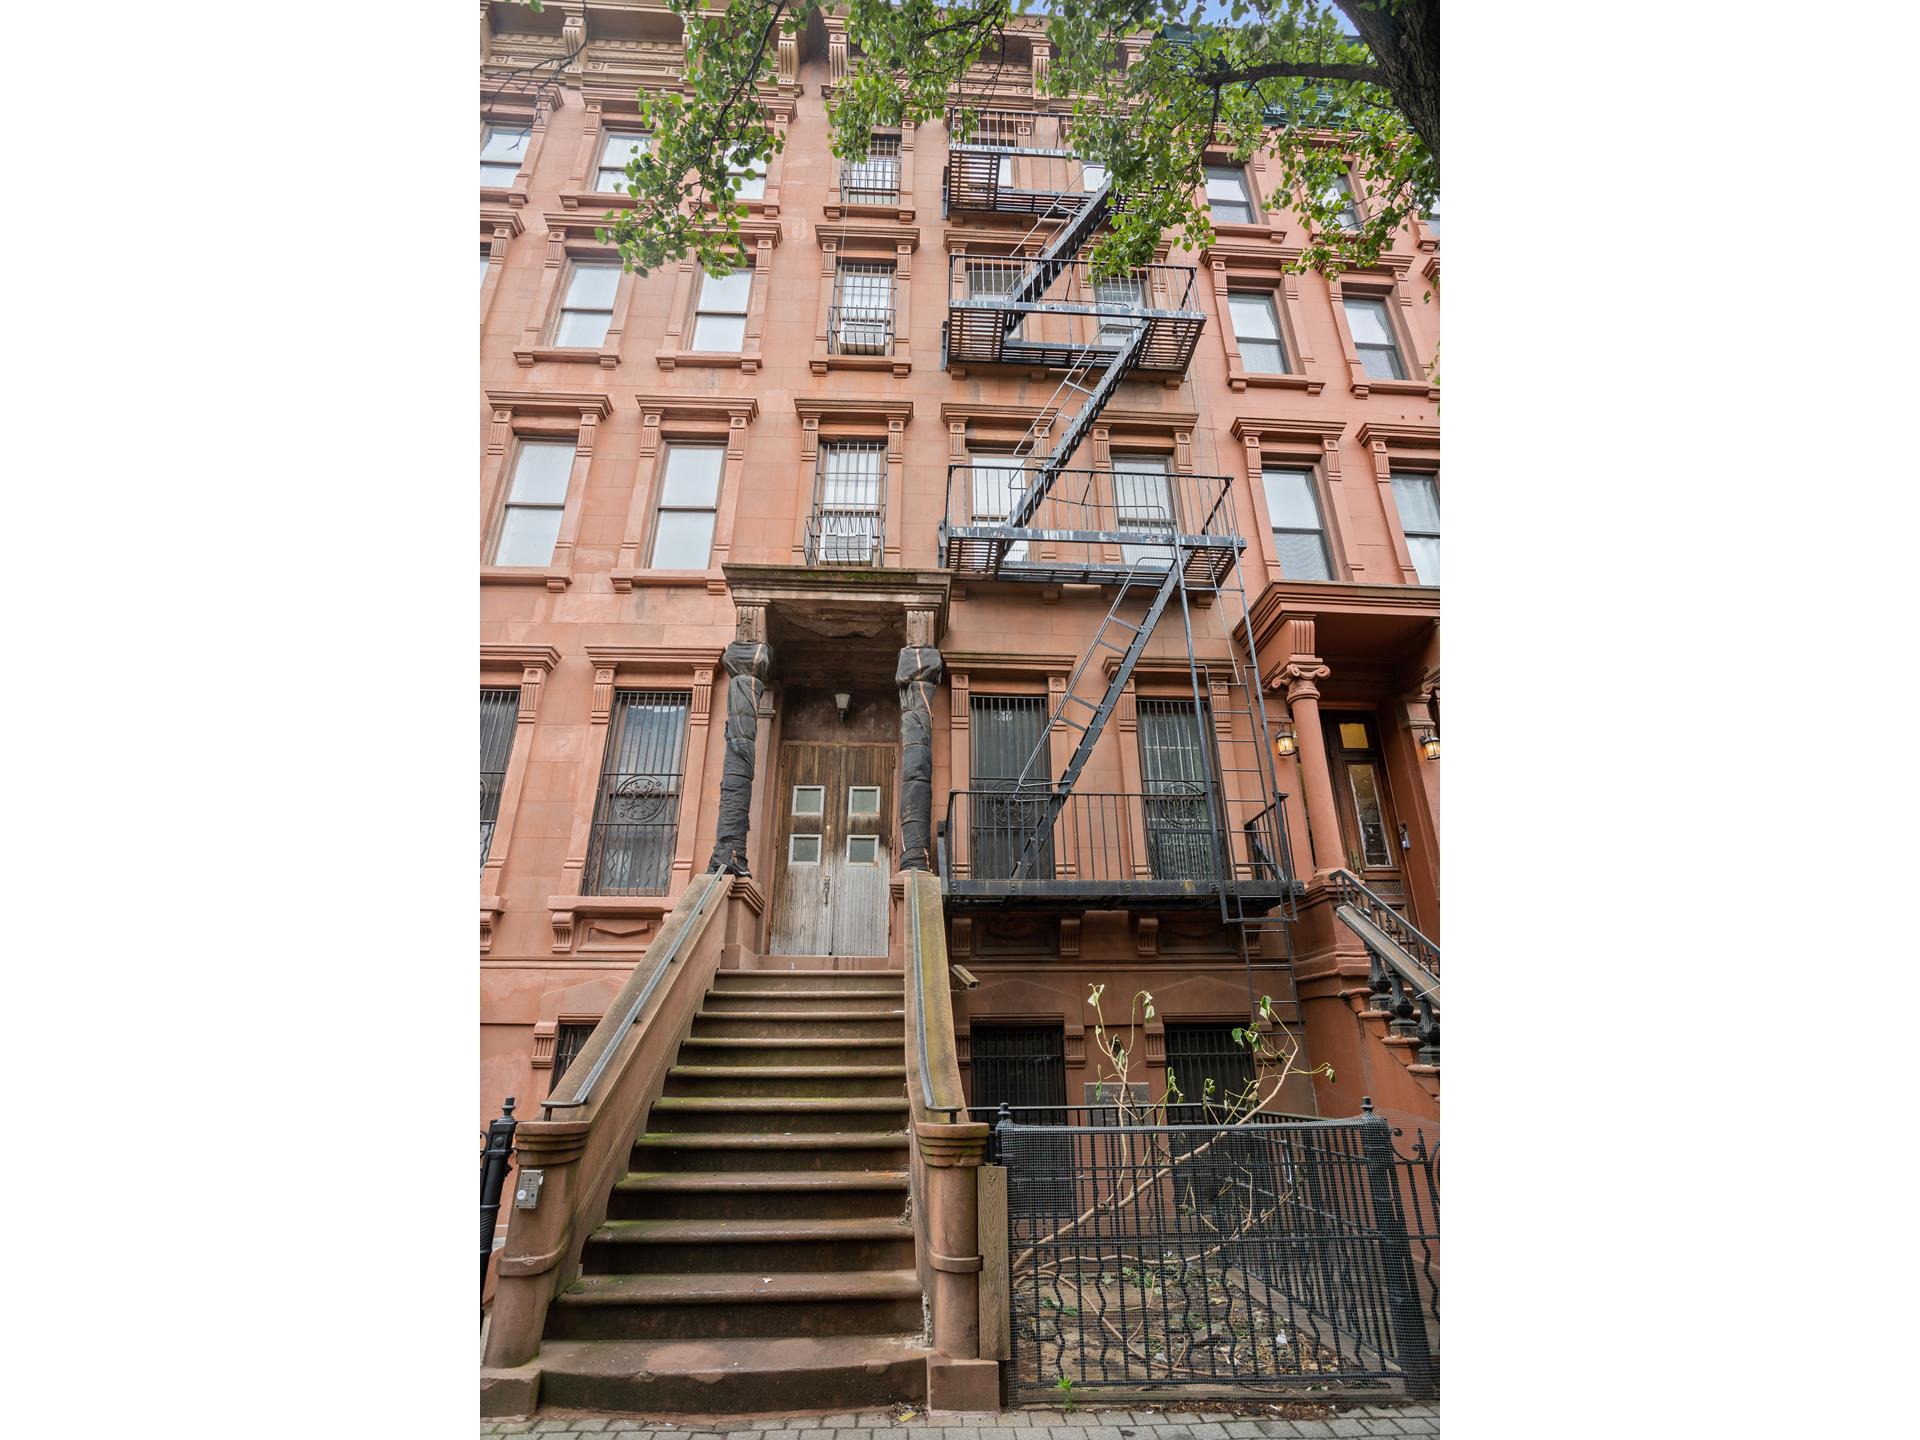 154 West 122nd Street, South Harlem, Upper Manhattan, NYC - 8 Bedrooms  
6.5 Bathrooms  
15 Rooms - 